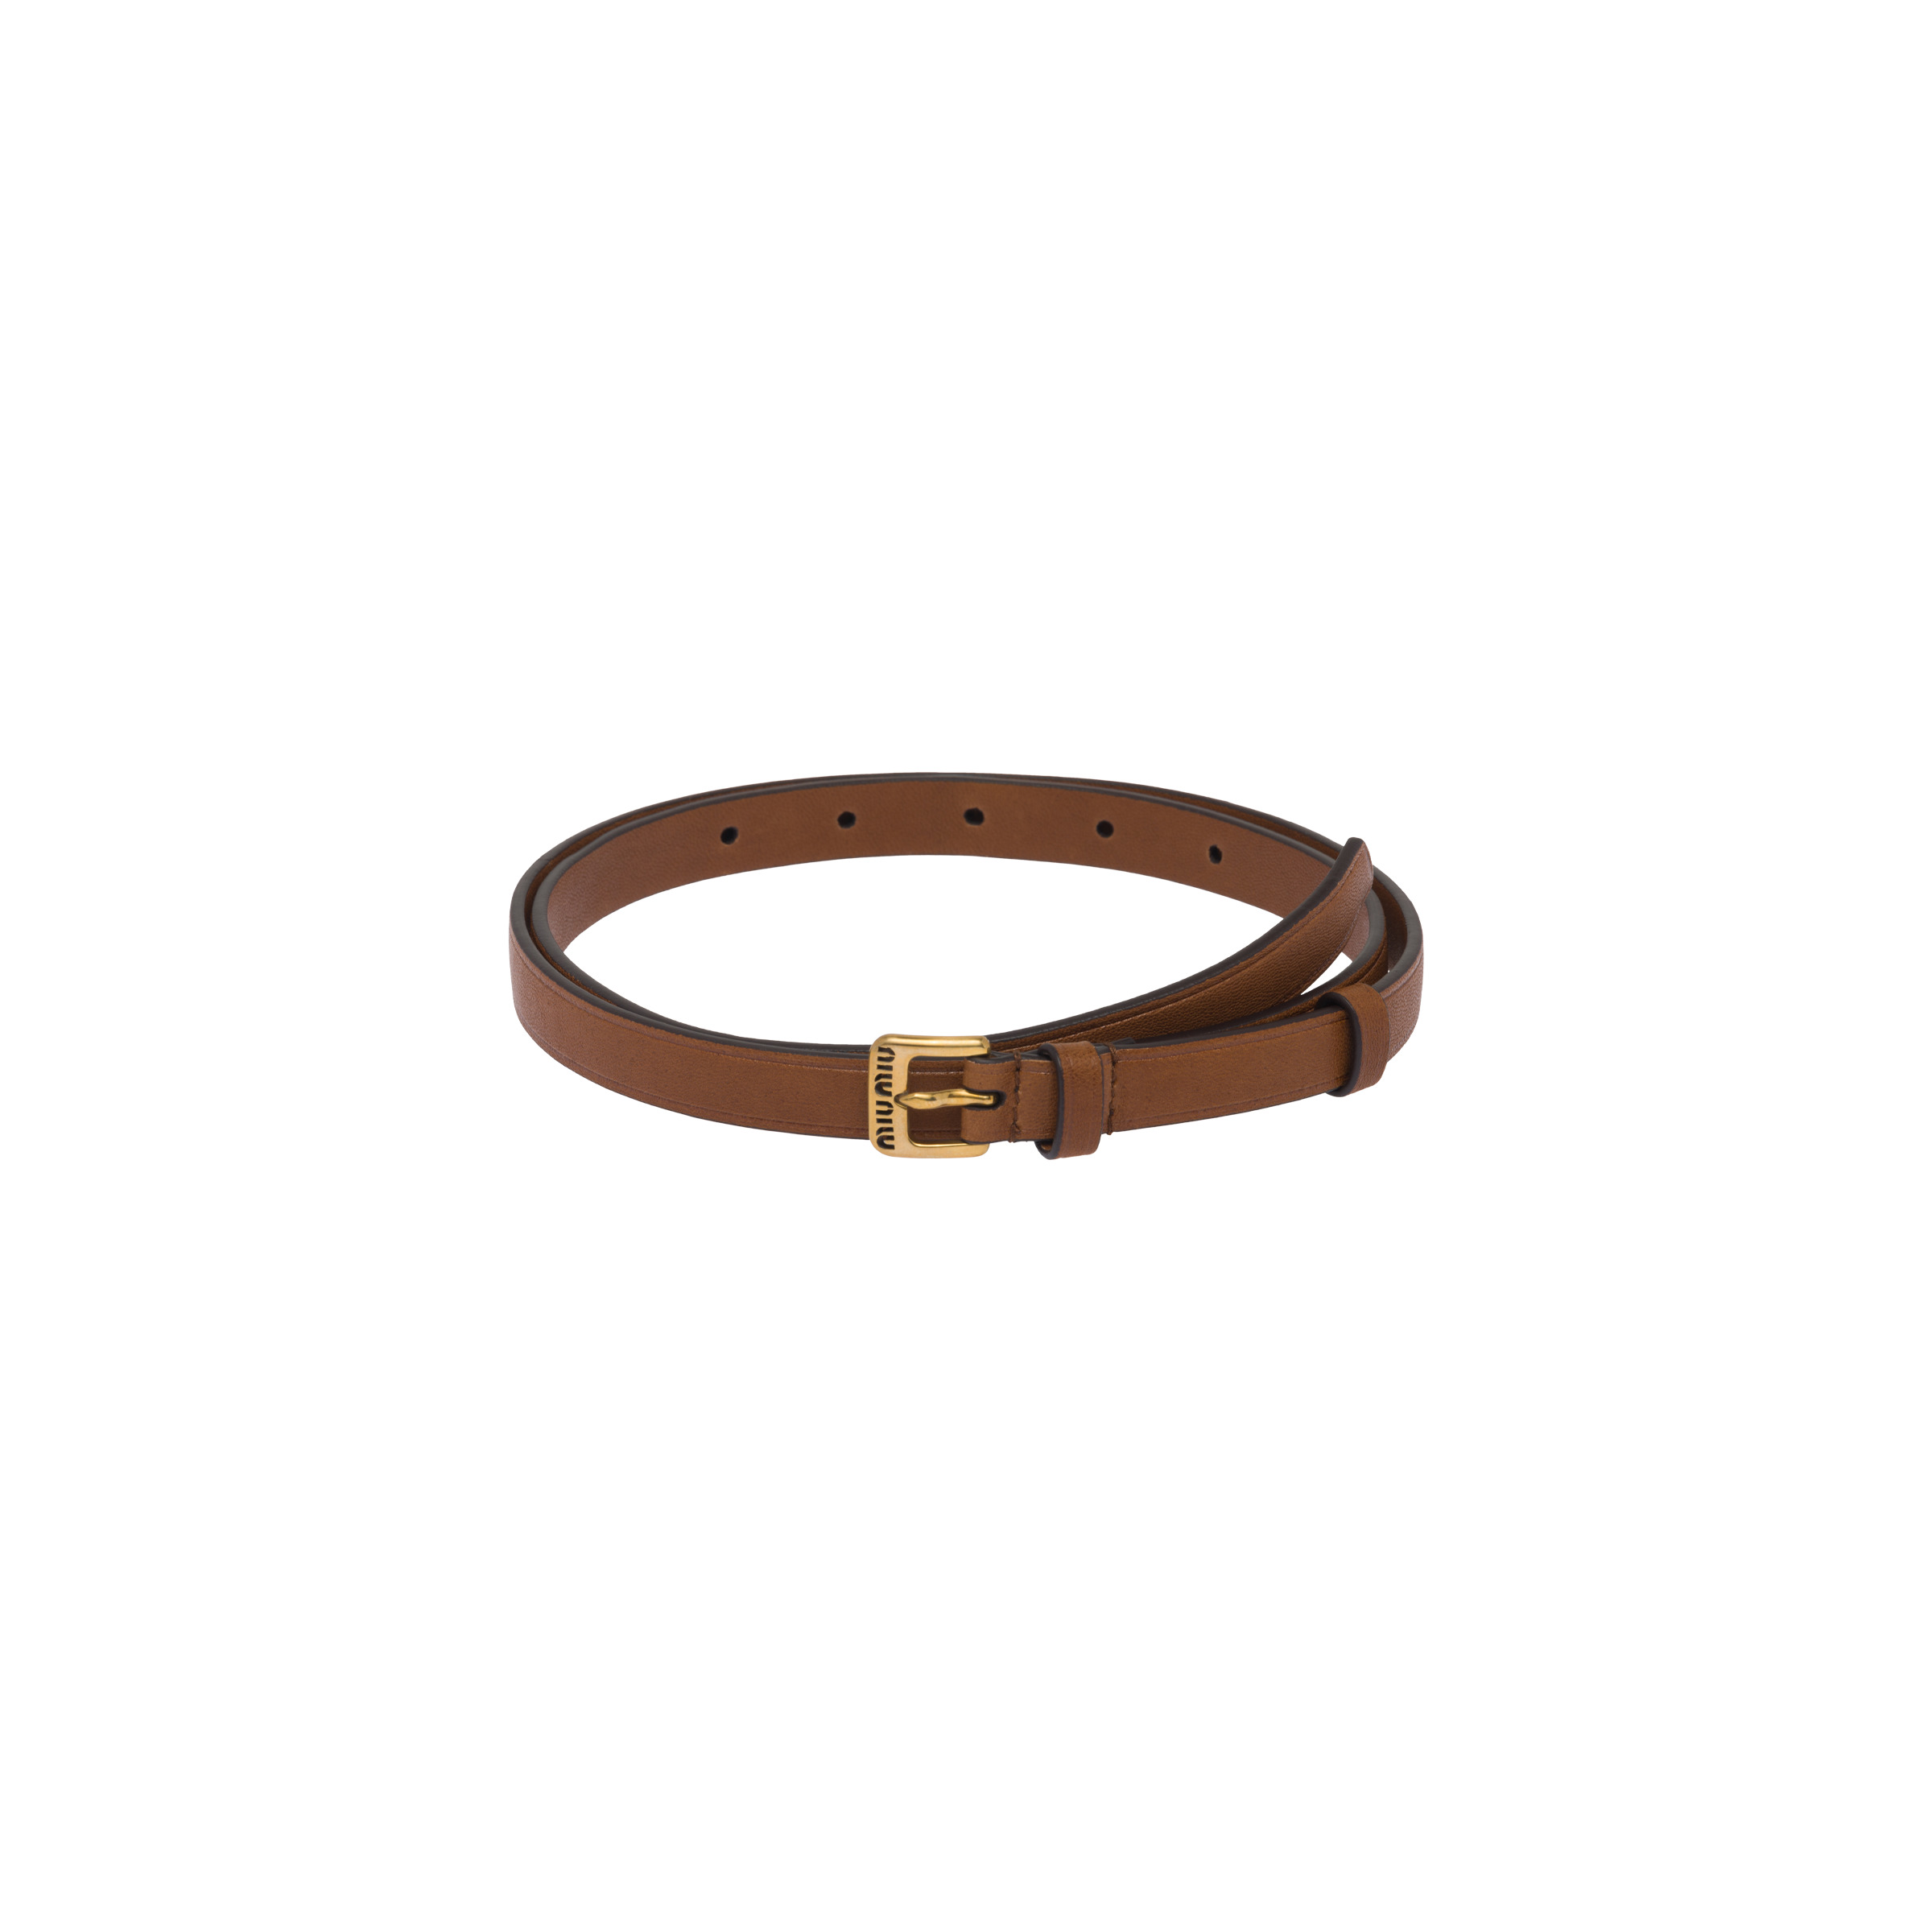 Nappa leather belt - 1